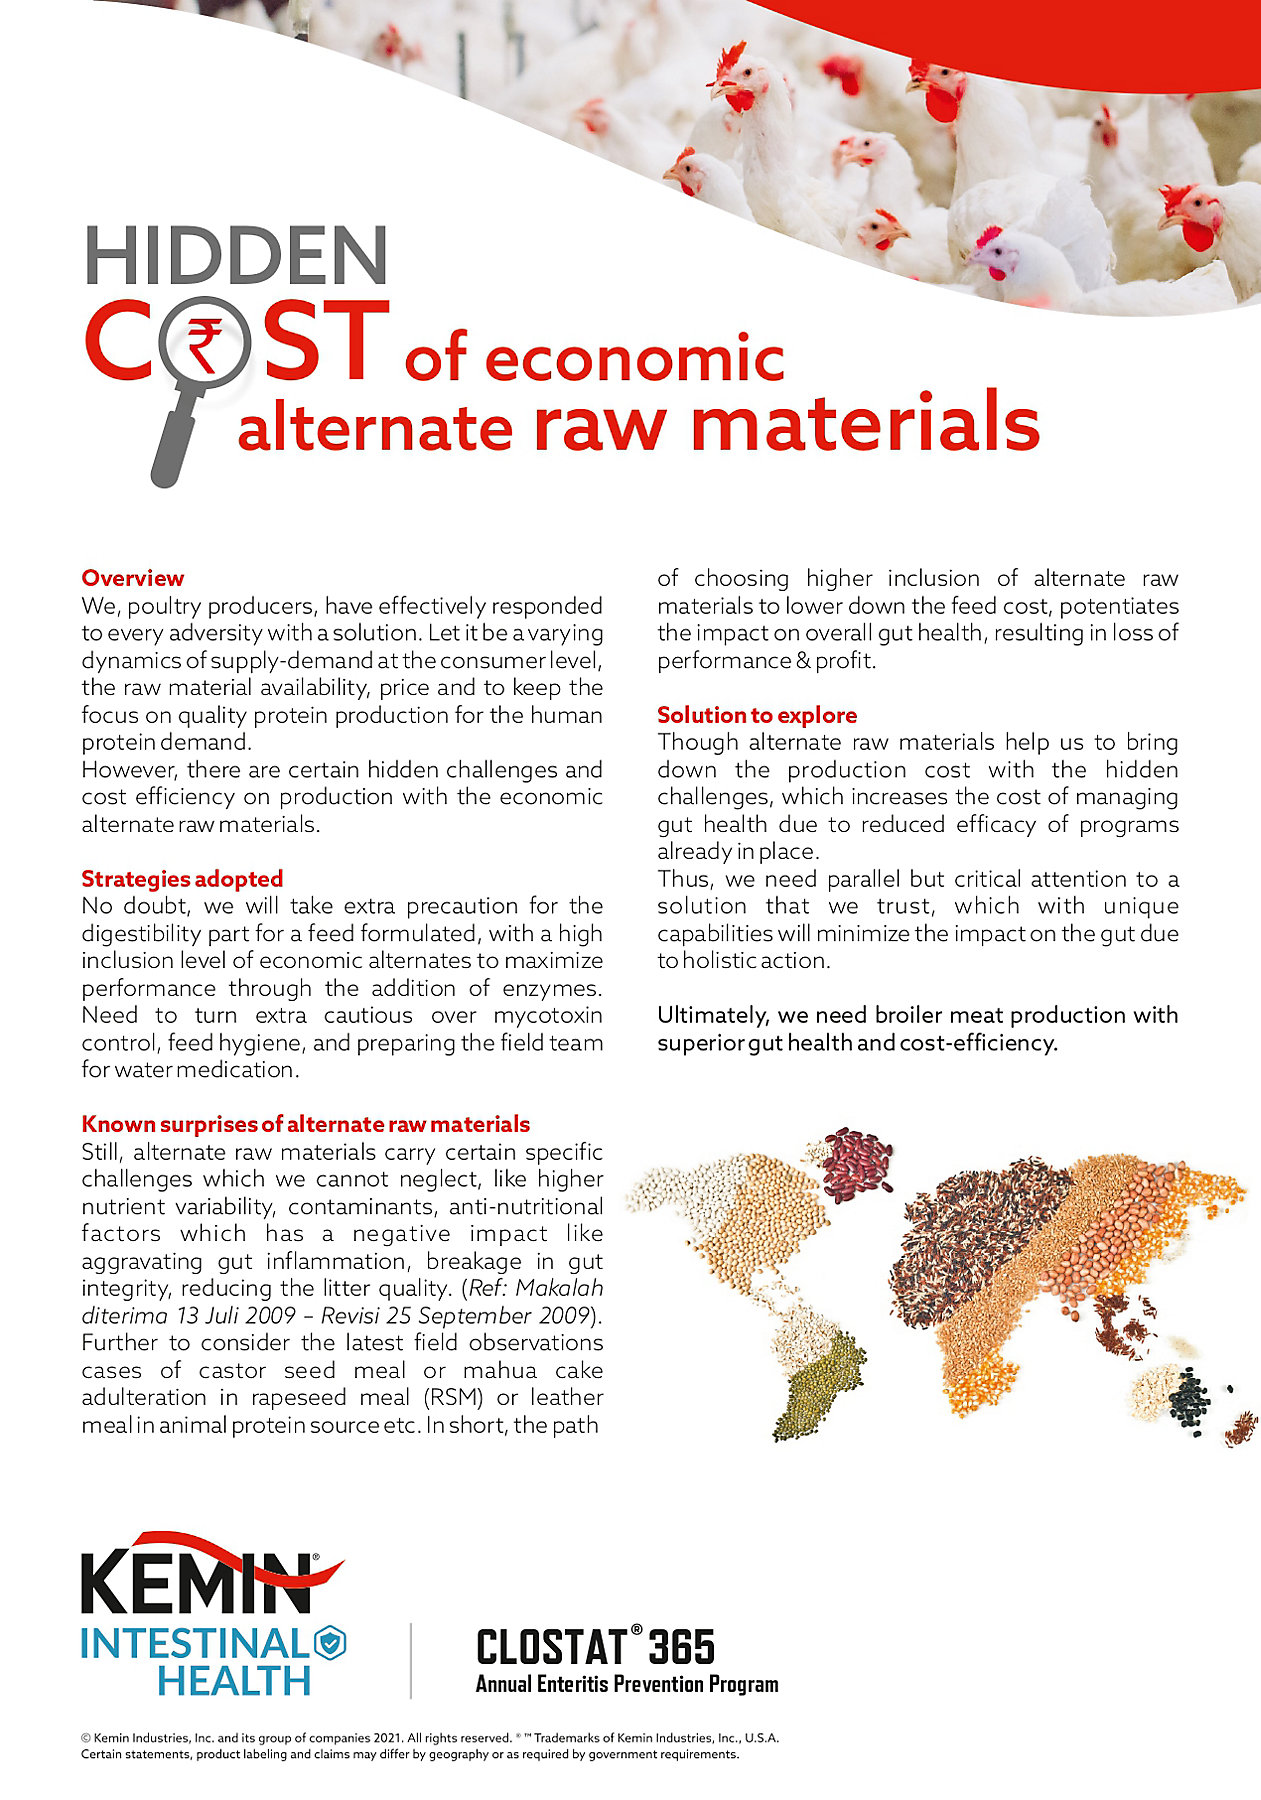 Hidden cost of economical alternate raw materials